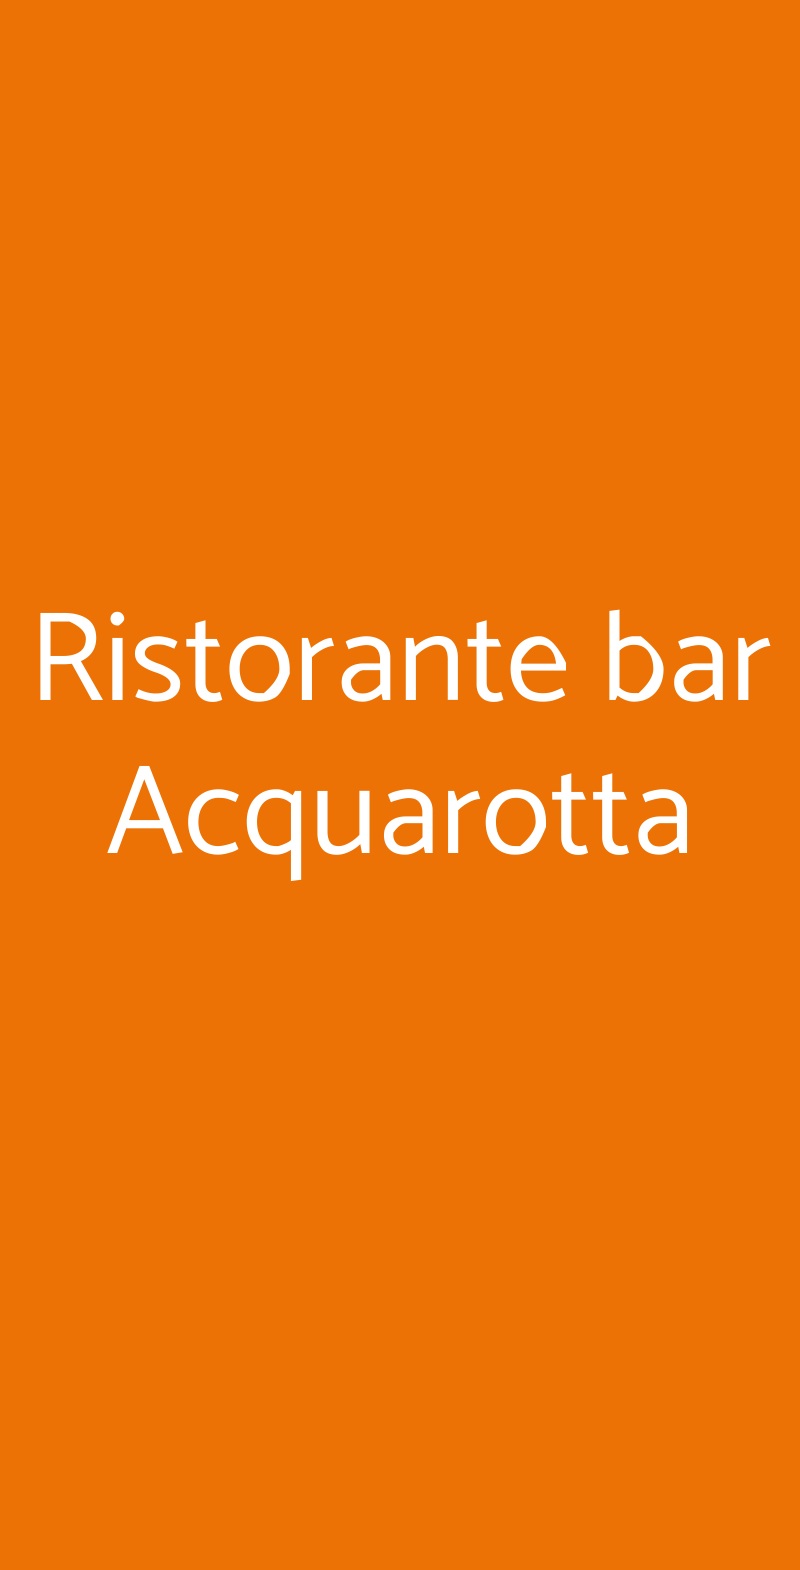 Ristorante bar Acquarotta Lesina menù 1 pagina